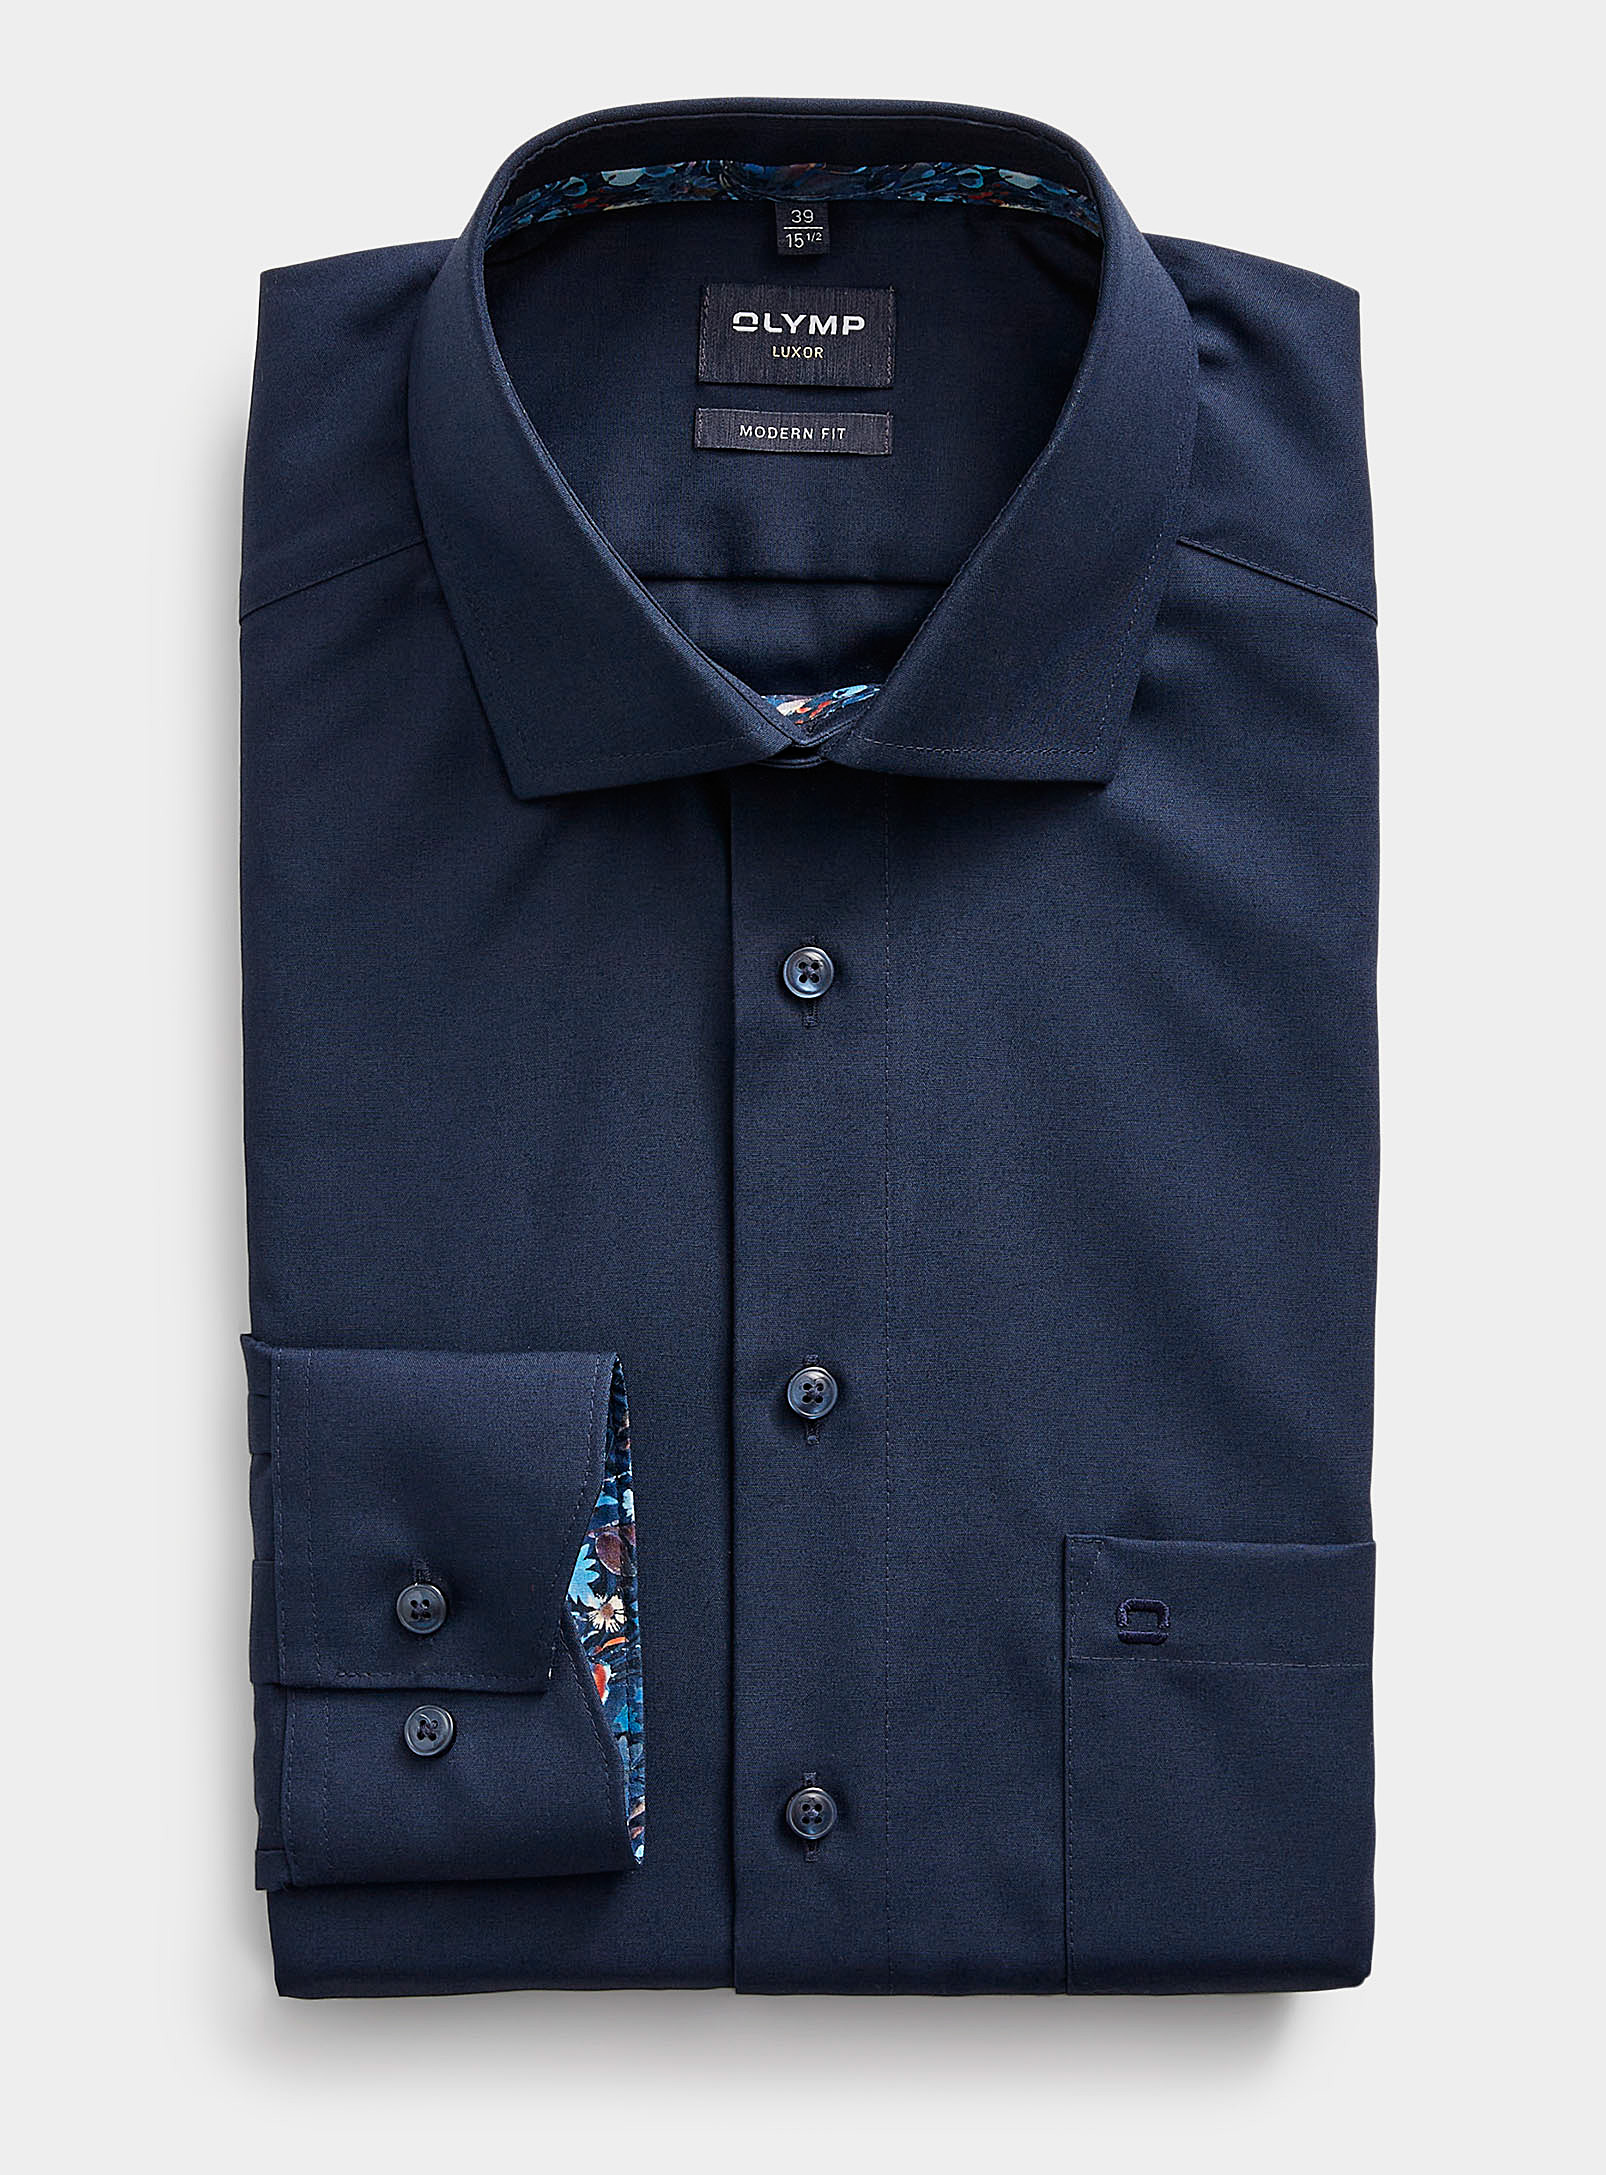 Olymp - Men's Pure cotton navy shirt Comfort fit